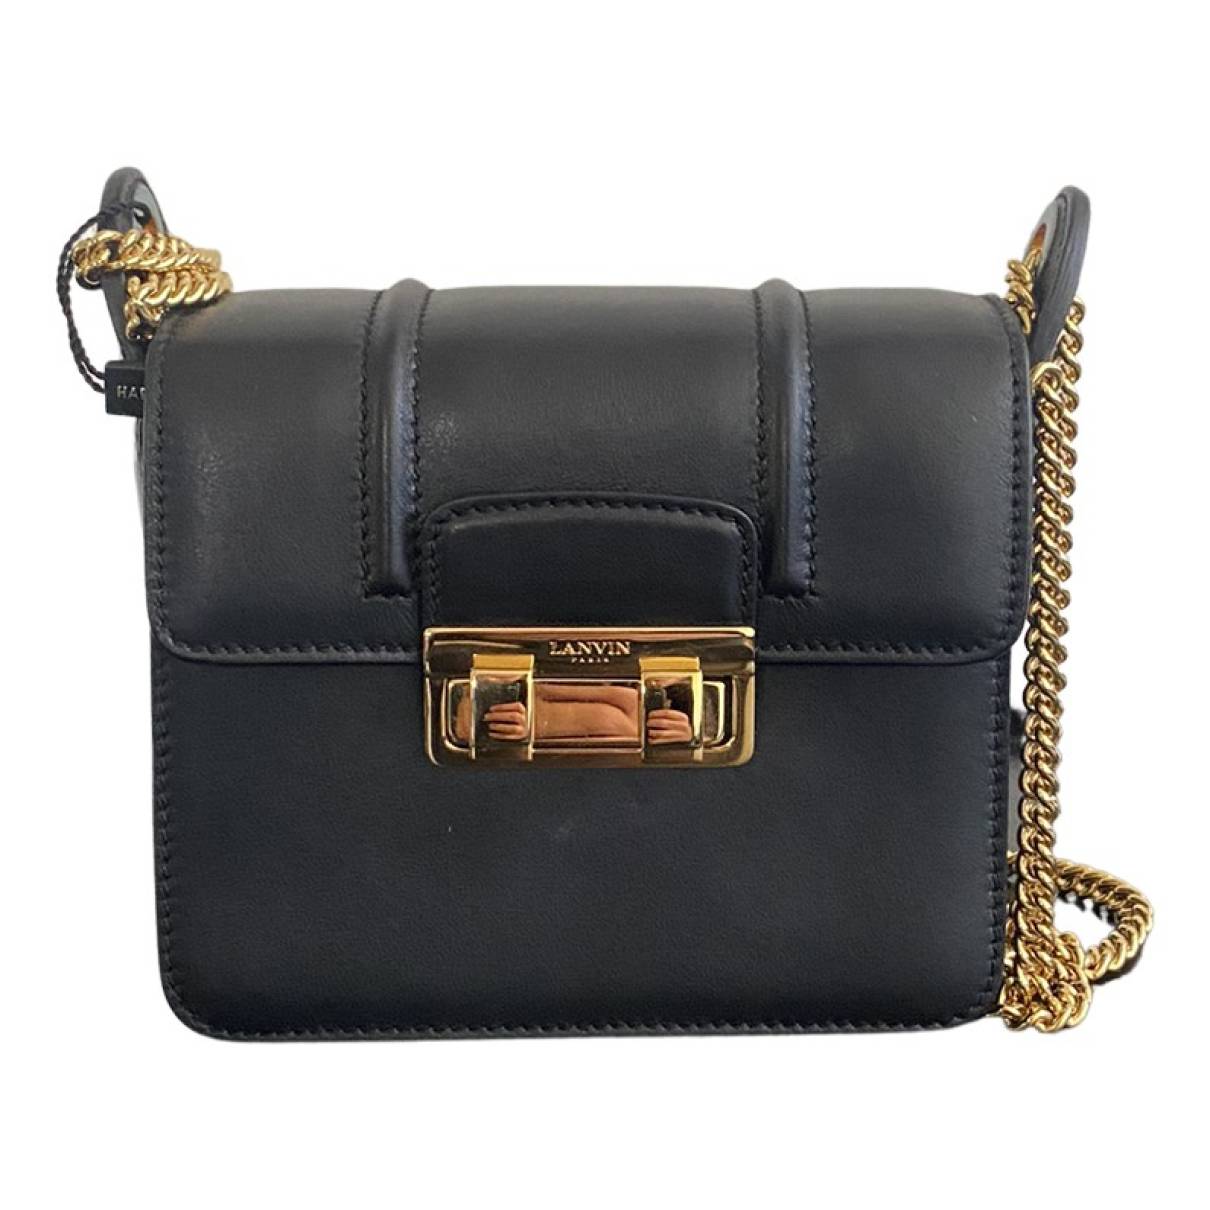 Jiji leather handbag Lanvin